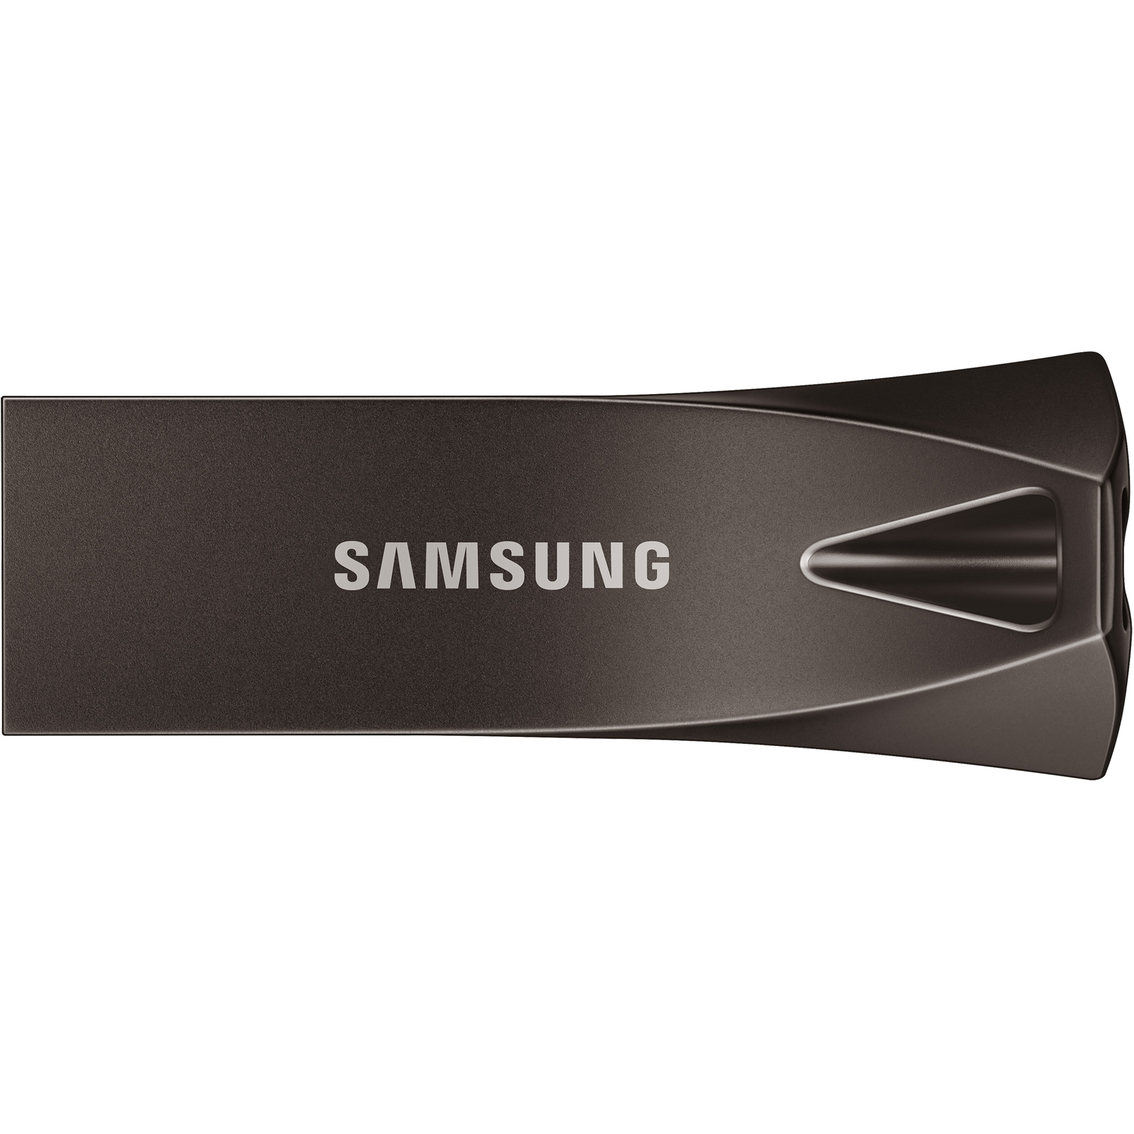 Samsung BAR Plus 128GB USB 3.1 Flash Drive - Image 3 of 3